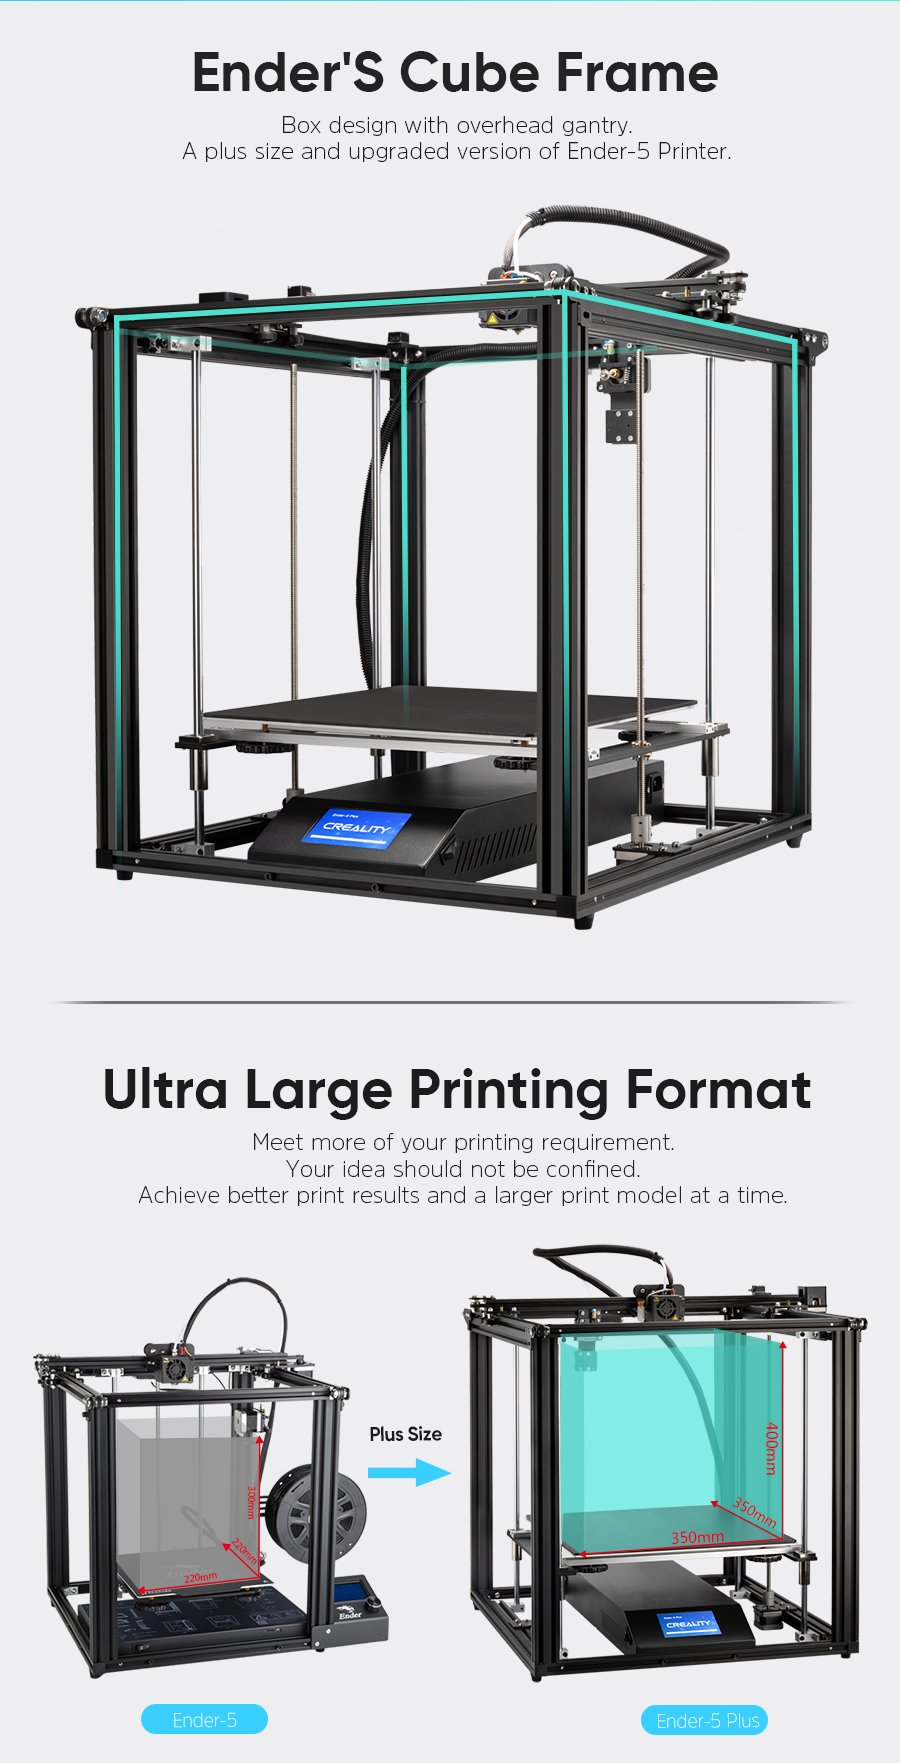 Official Creality Ender 5 Plus 3D Printer